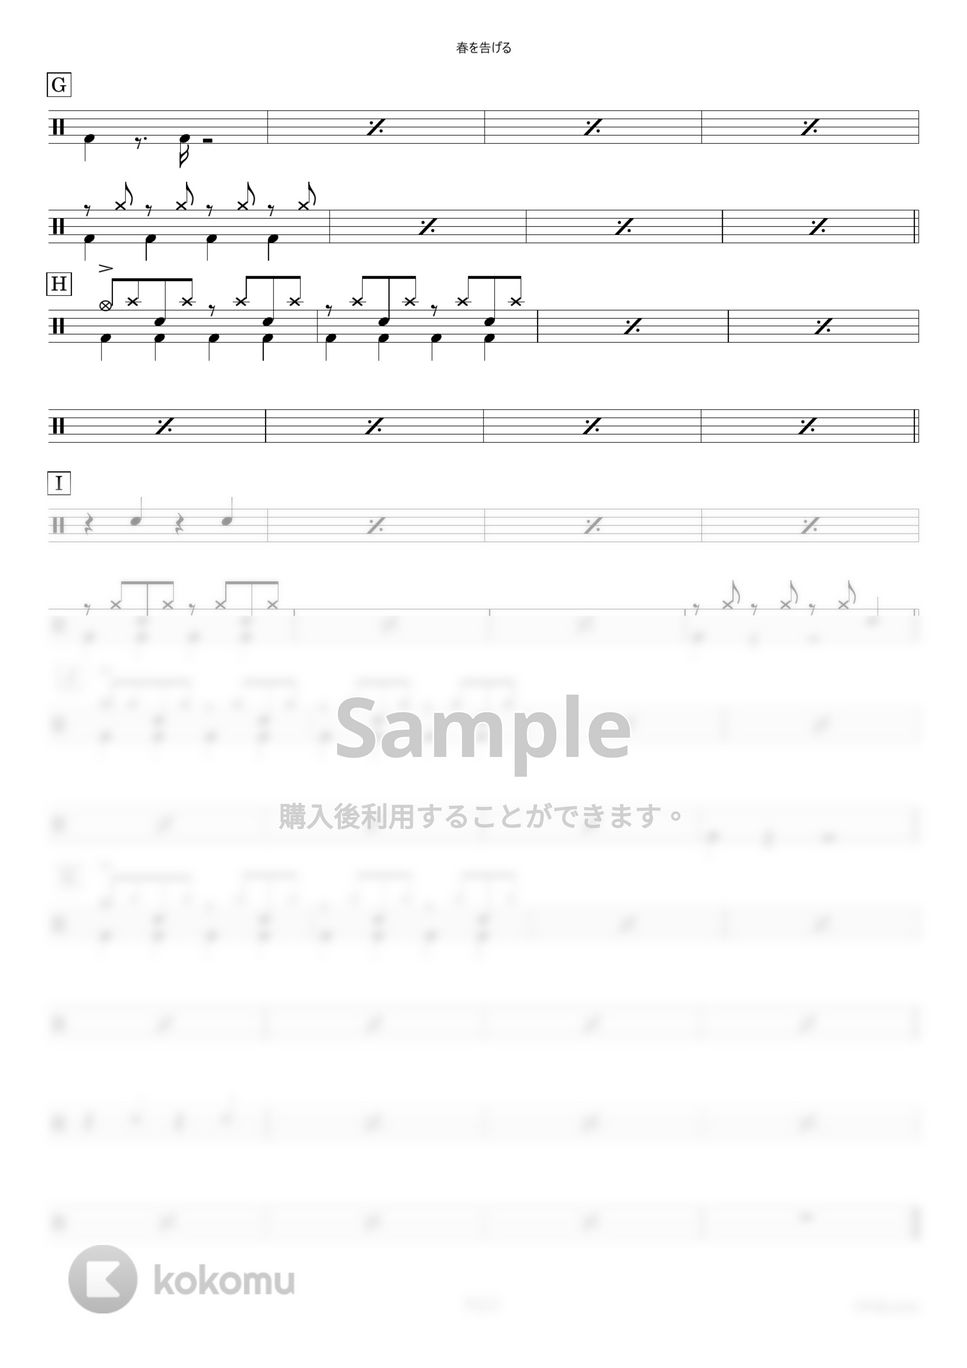 yama - 春を告げる【ドラム楽譜】 by HYdrums